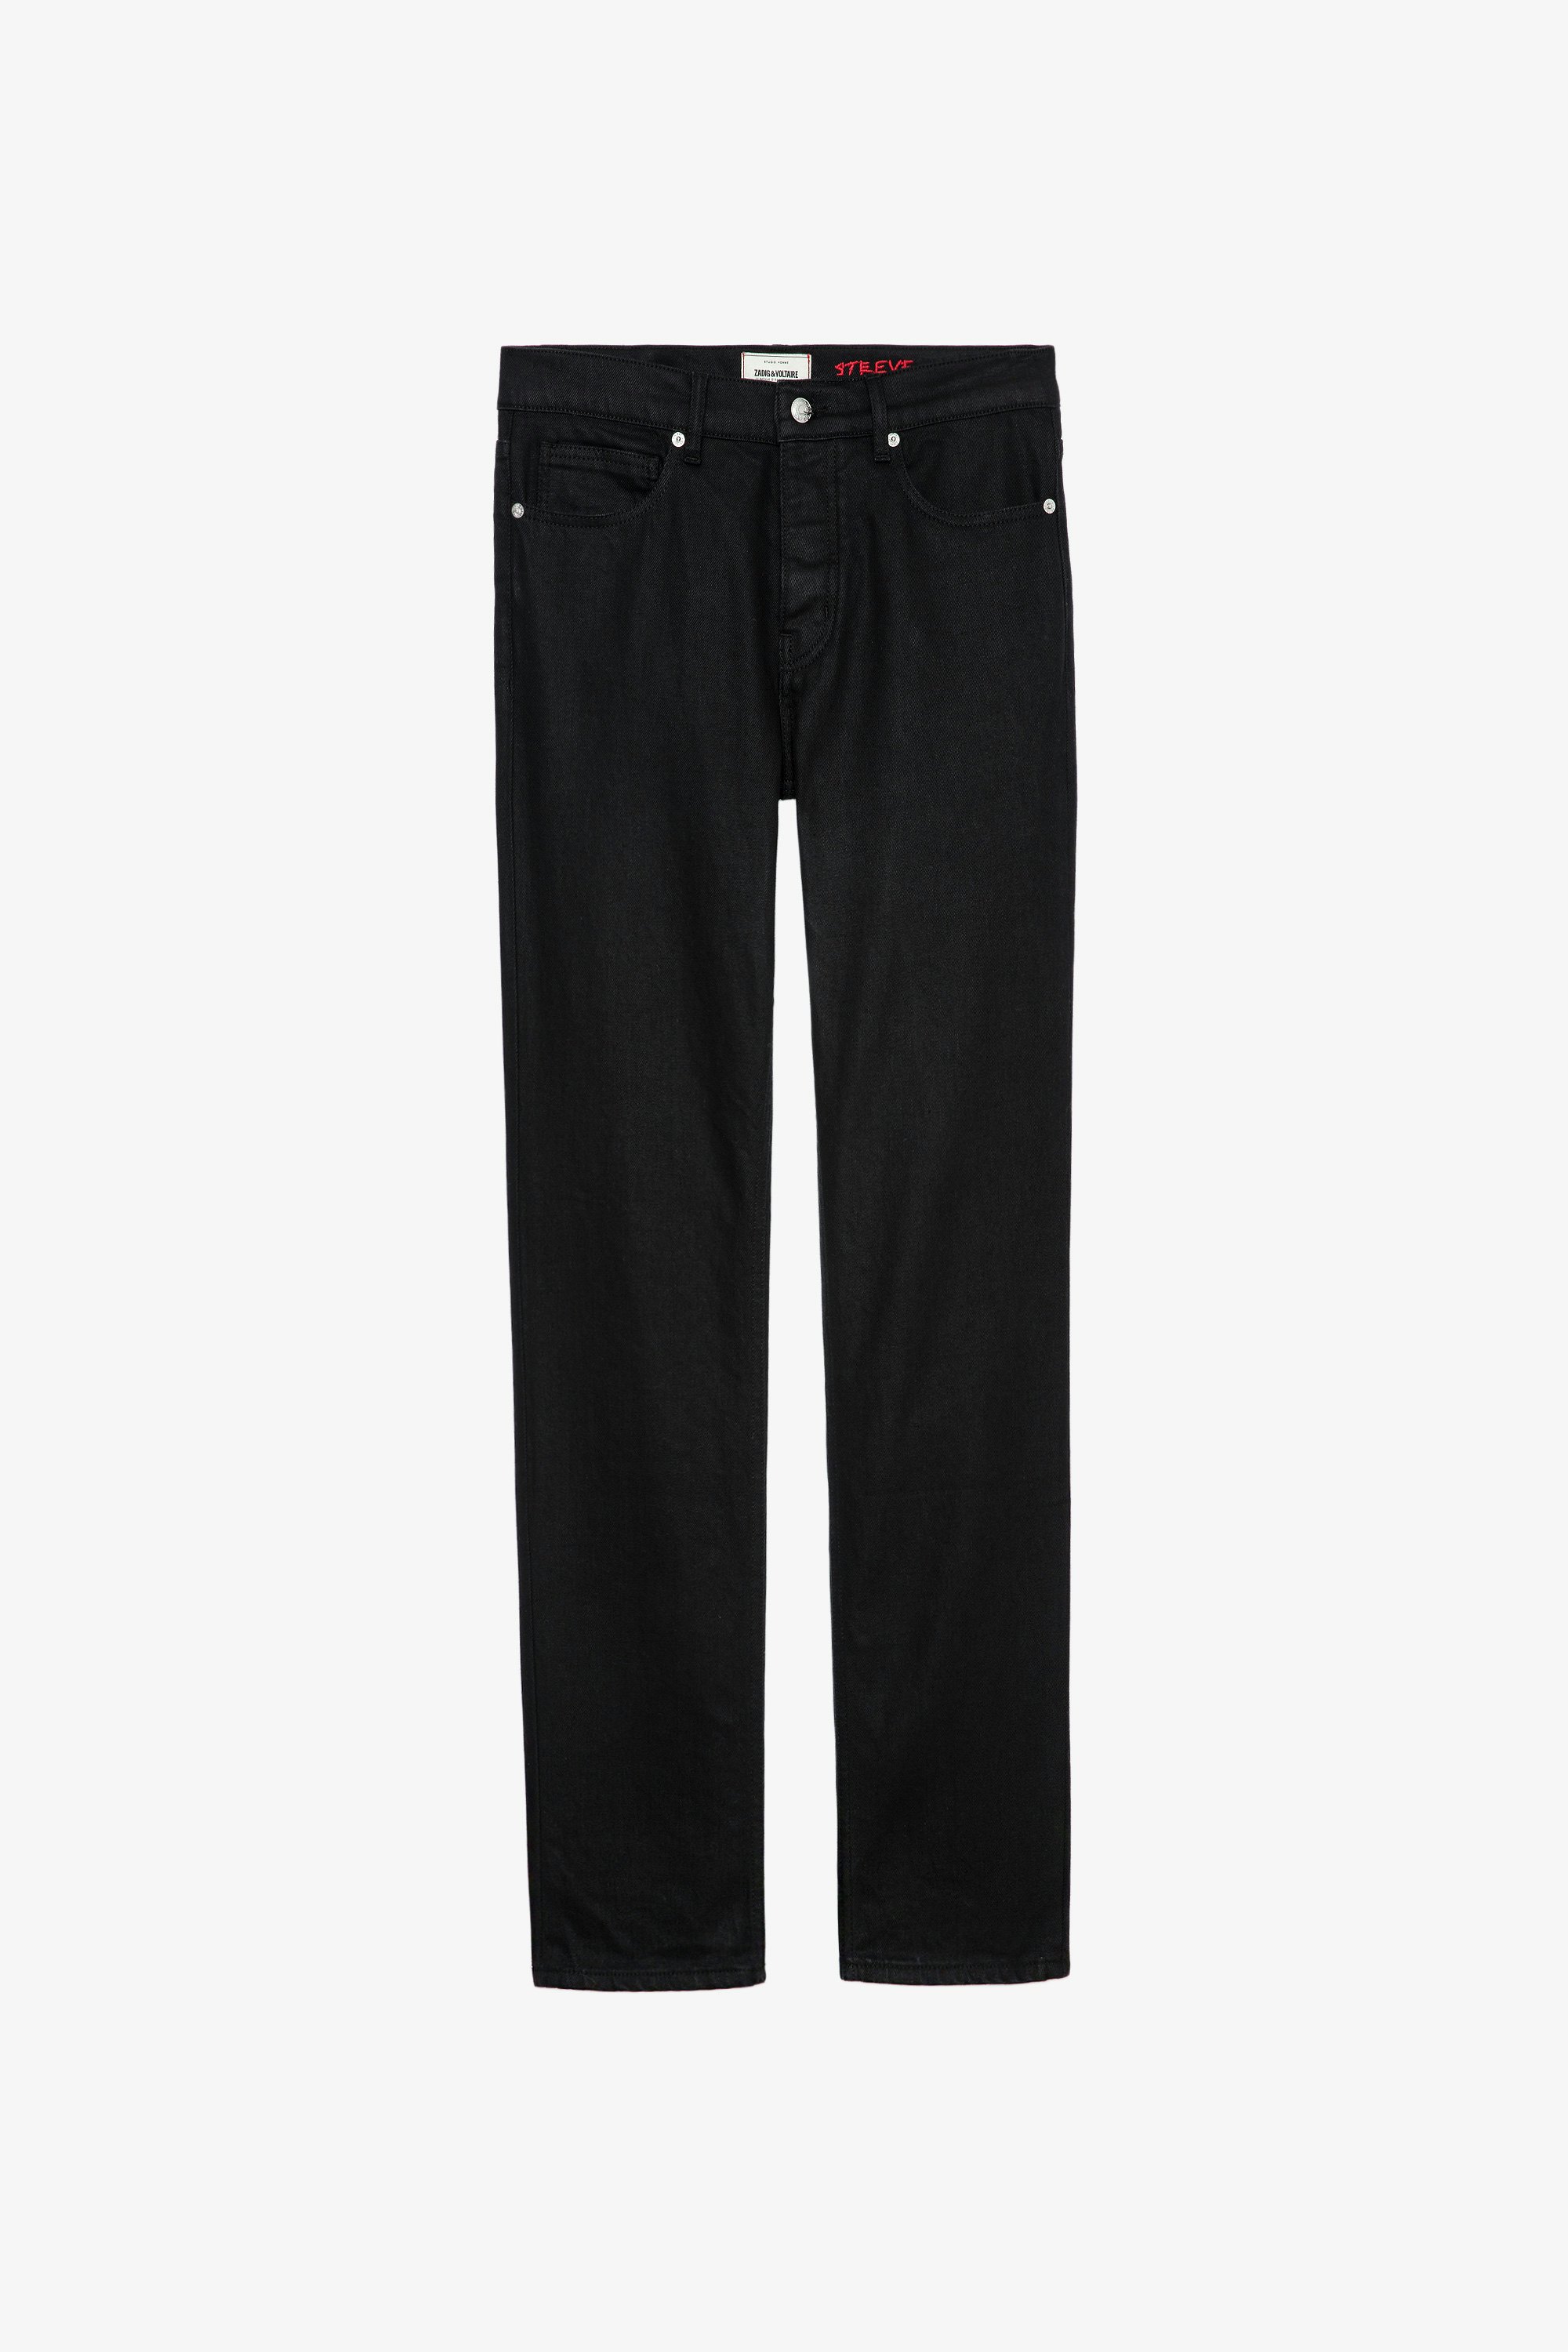 Steeve Jeans Men’s regular-fit black denim jeans